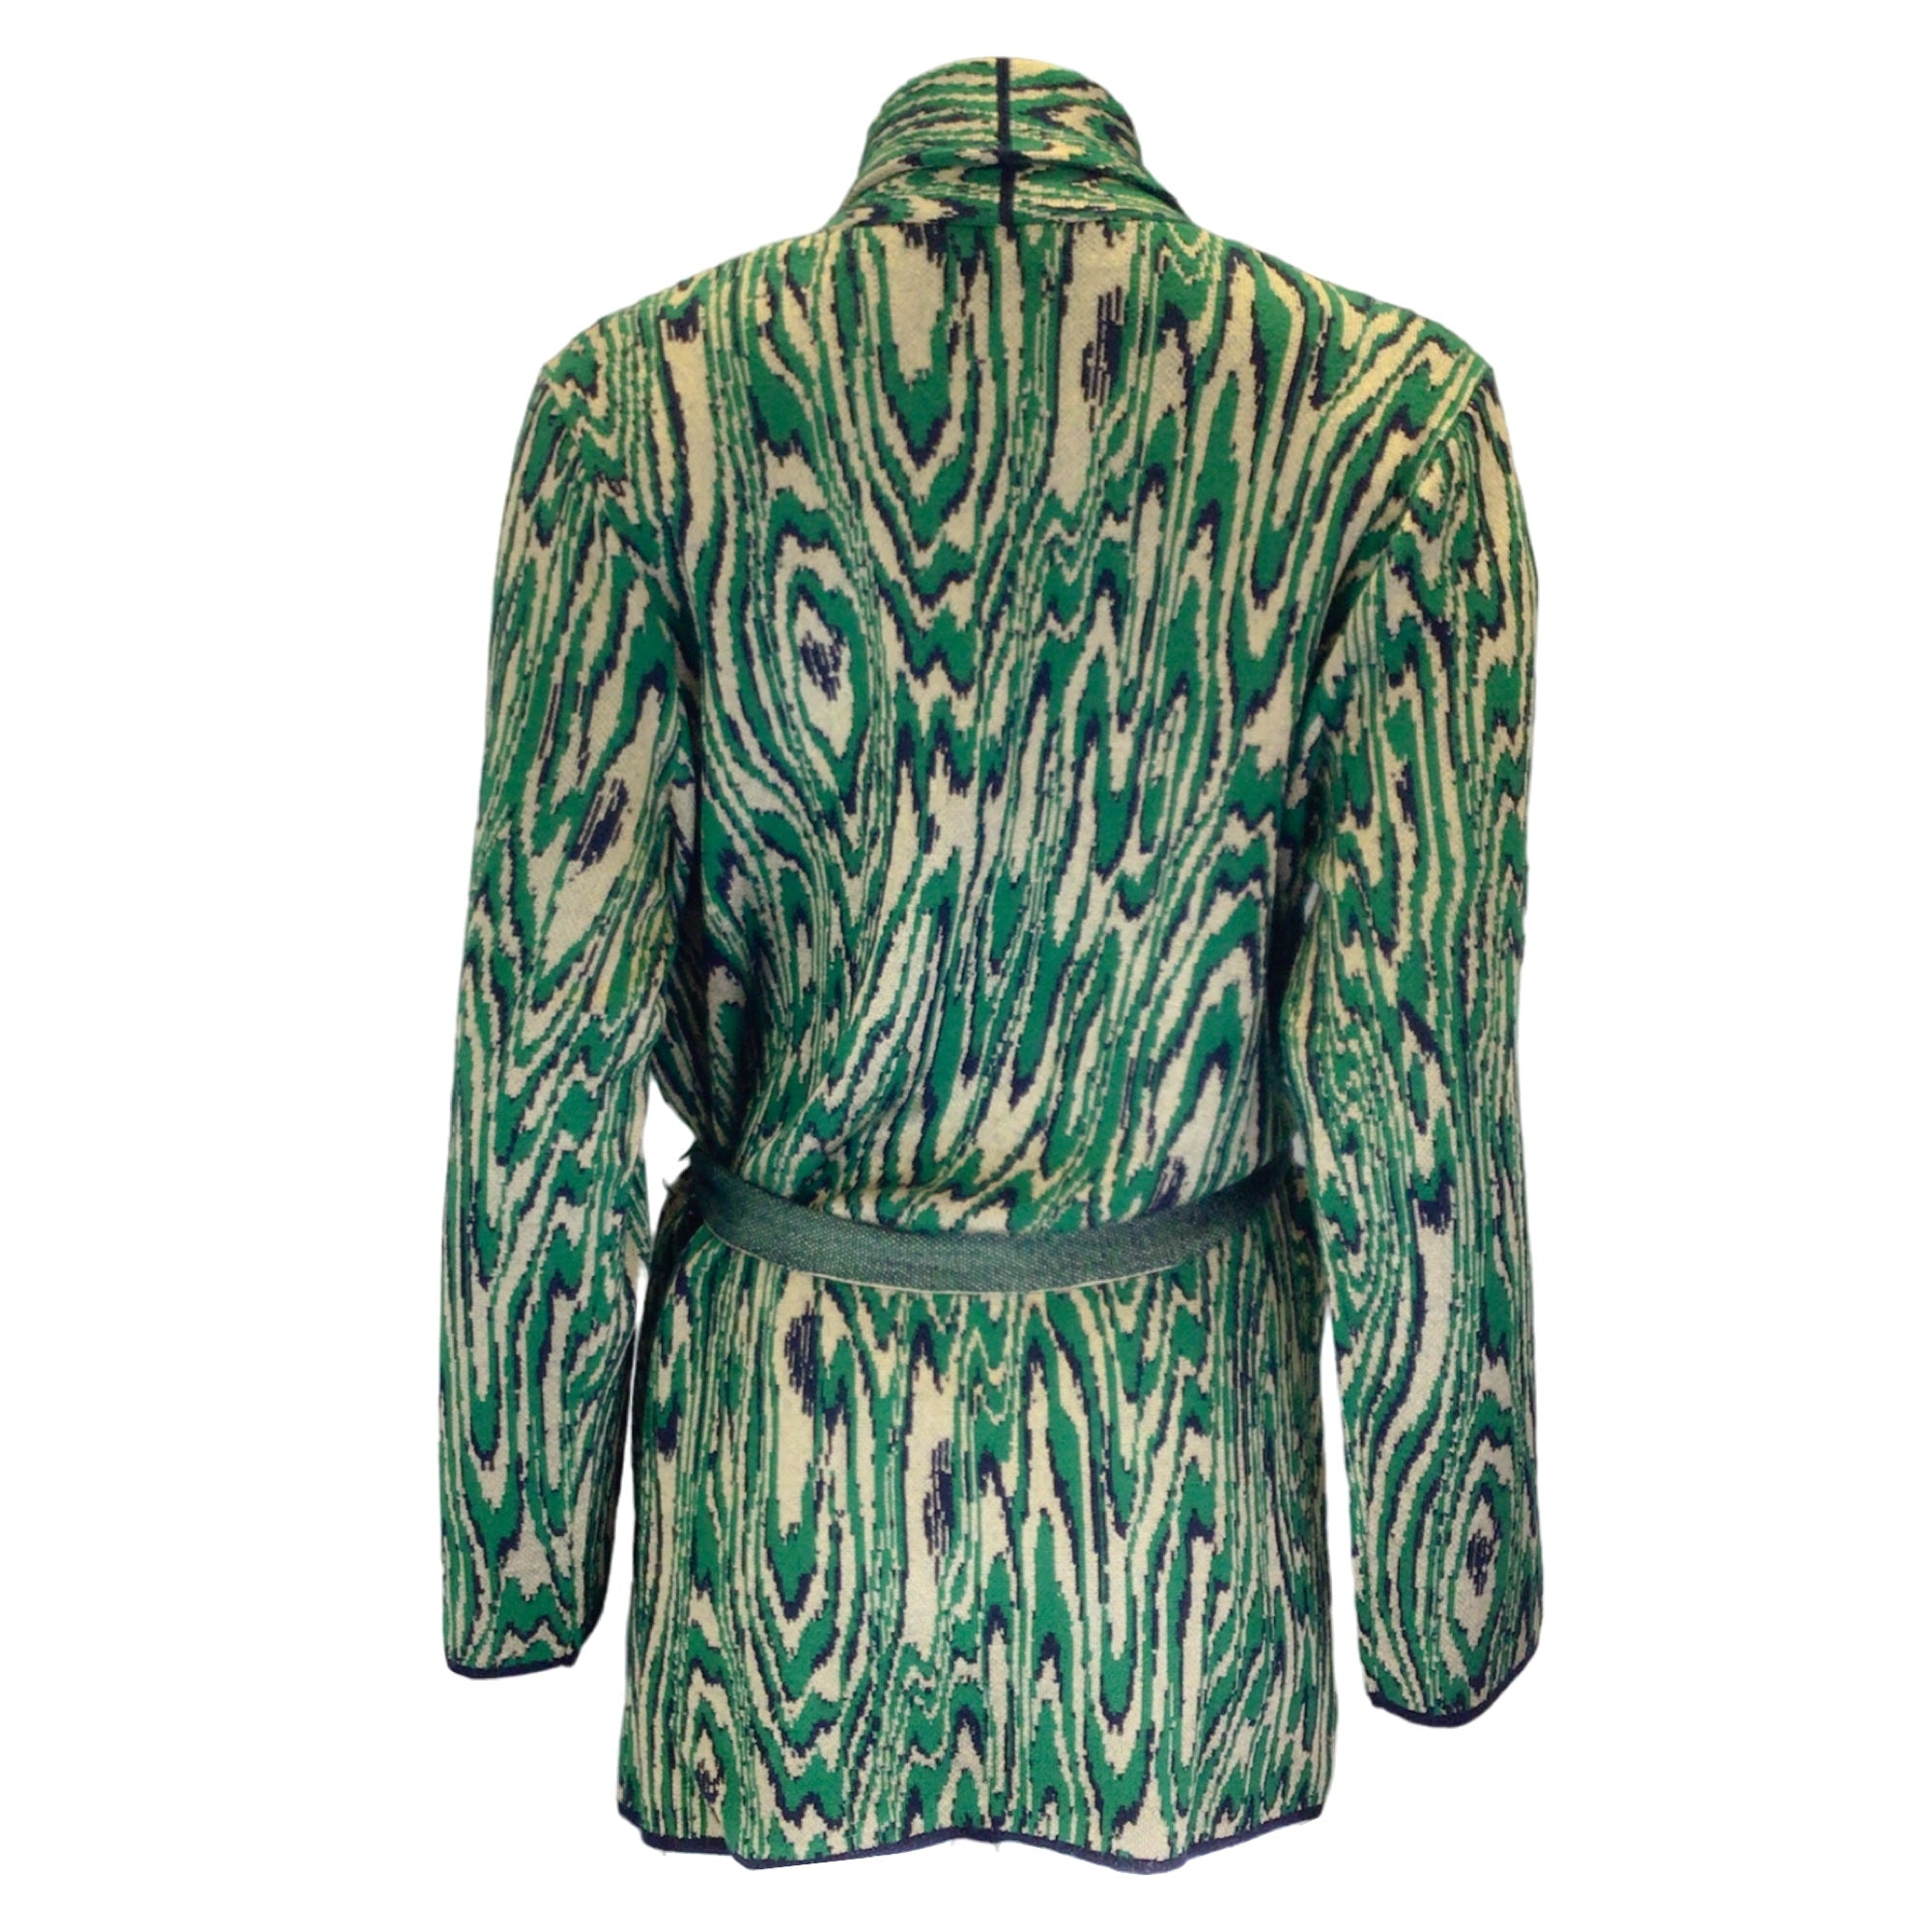 Dries van Noten Green / Beige / Black Long Sleeved Belted Wool Knit Cardigan Sweater